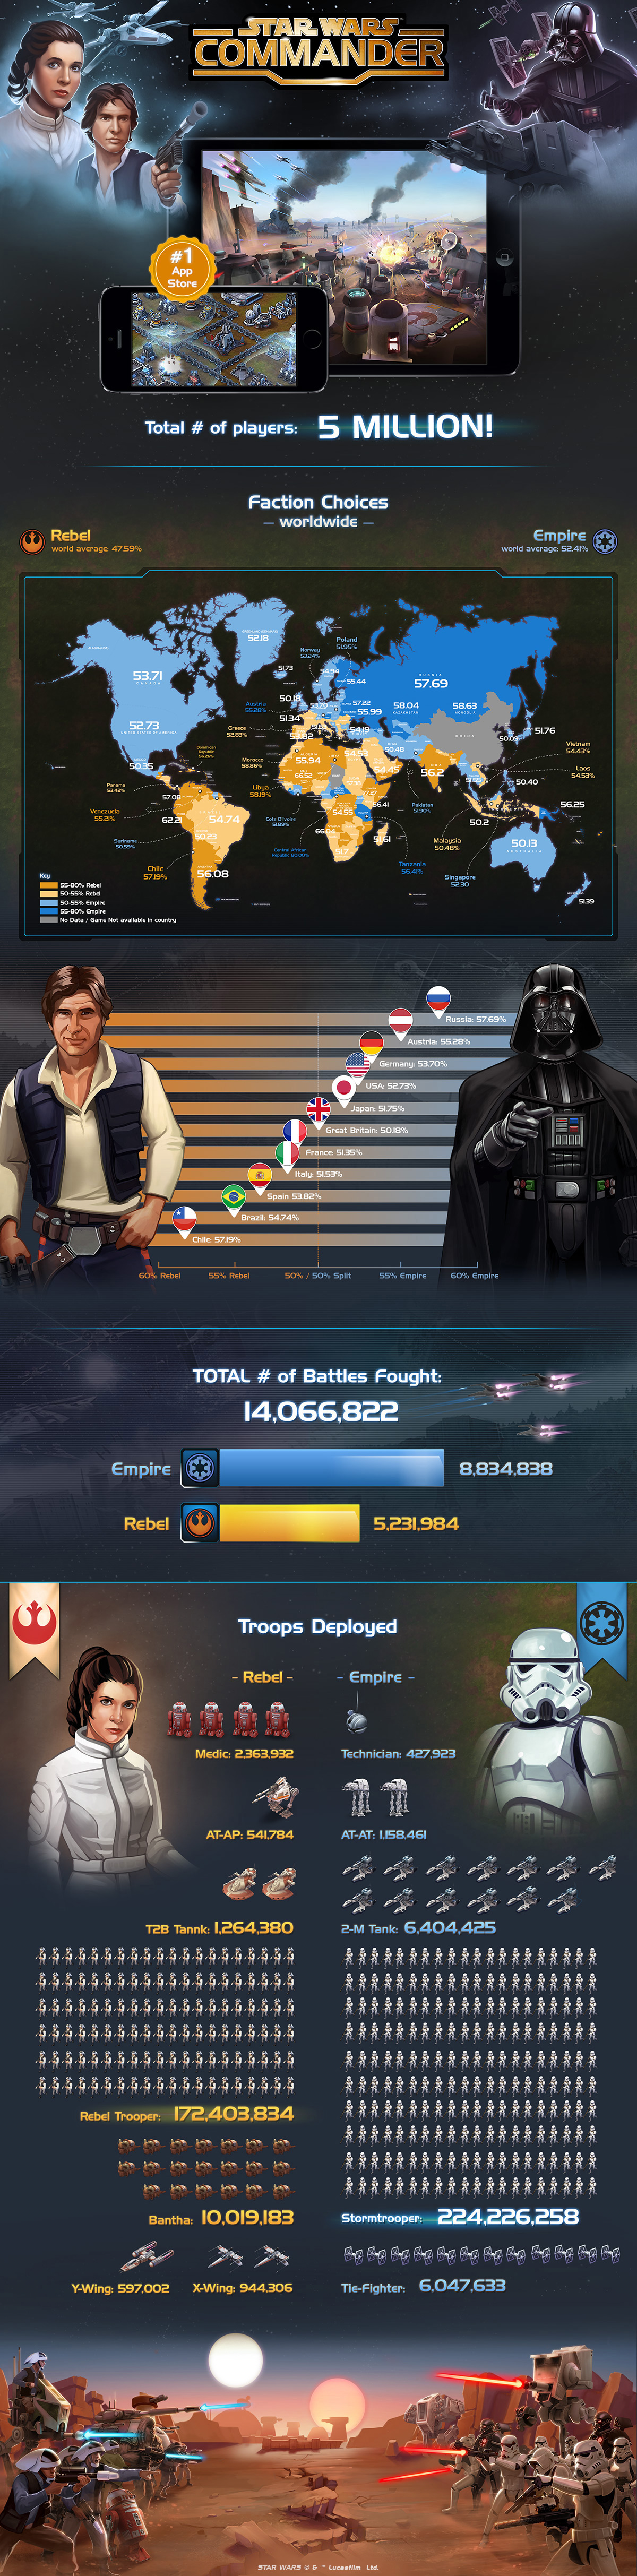 Star Wars Commander infographic